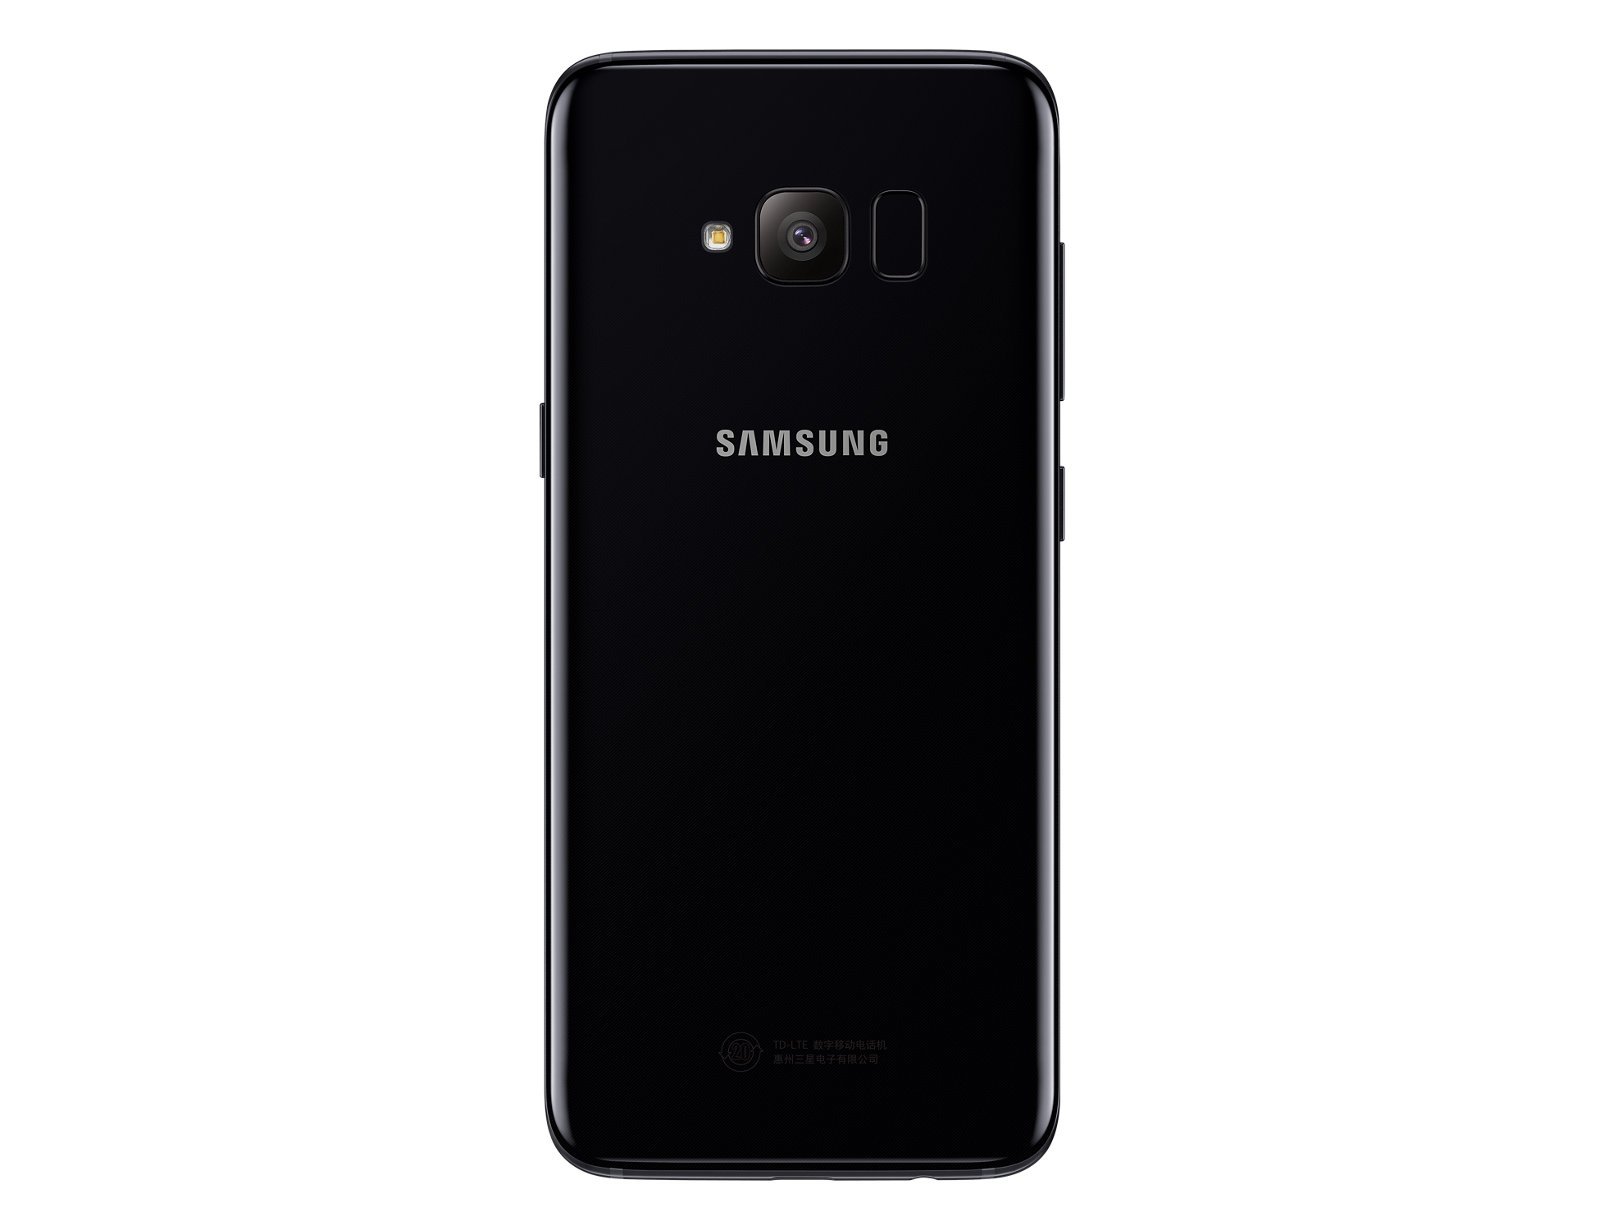 Samsung Galaxy S Luxury Lite) specs, review, release date - PhonesData